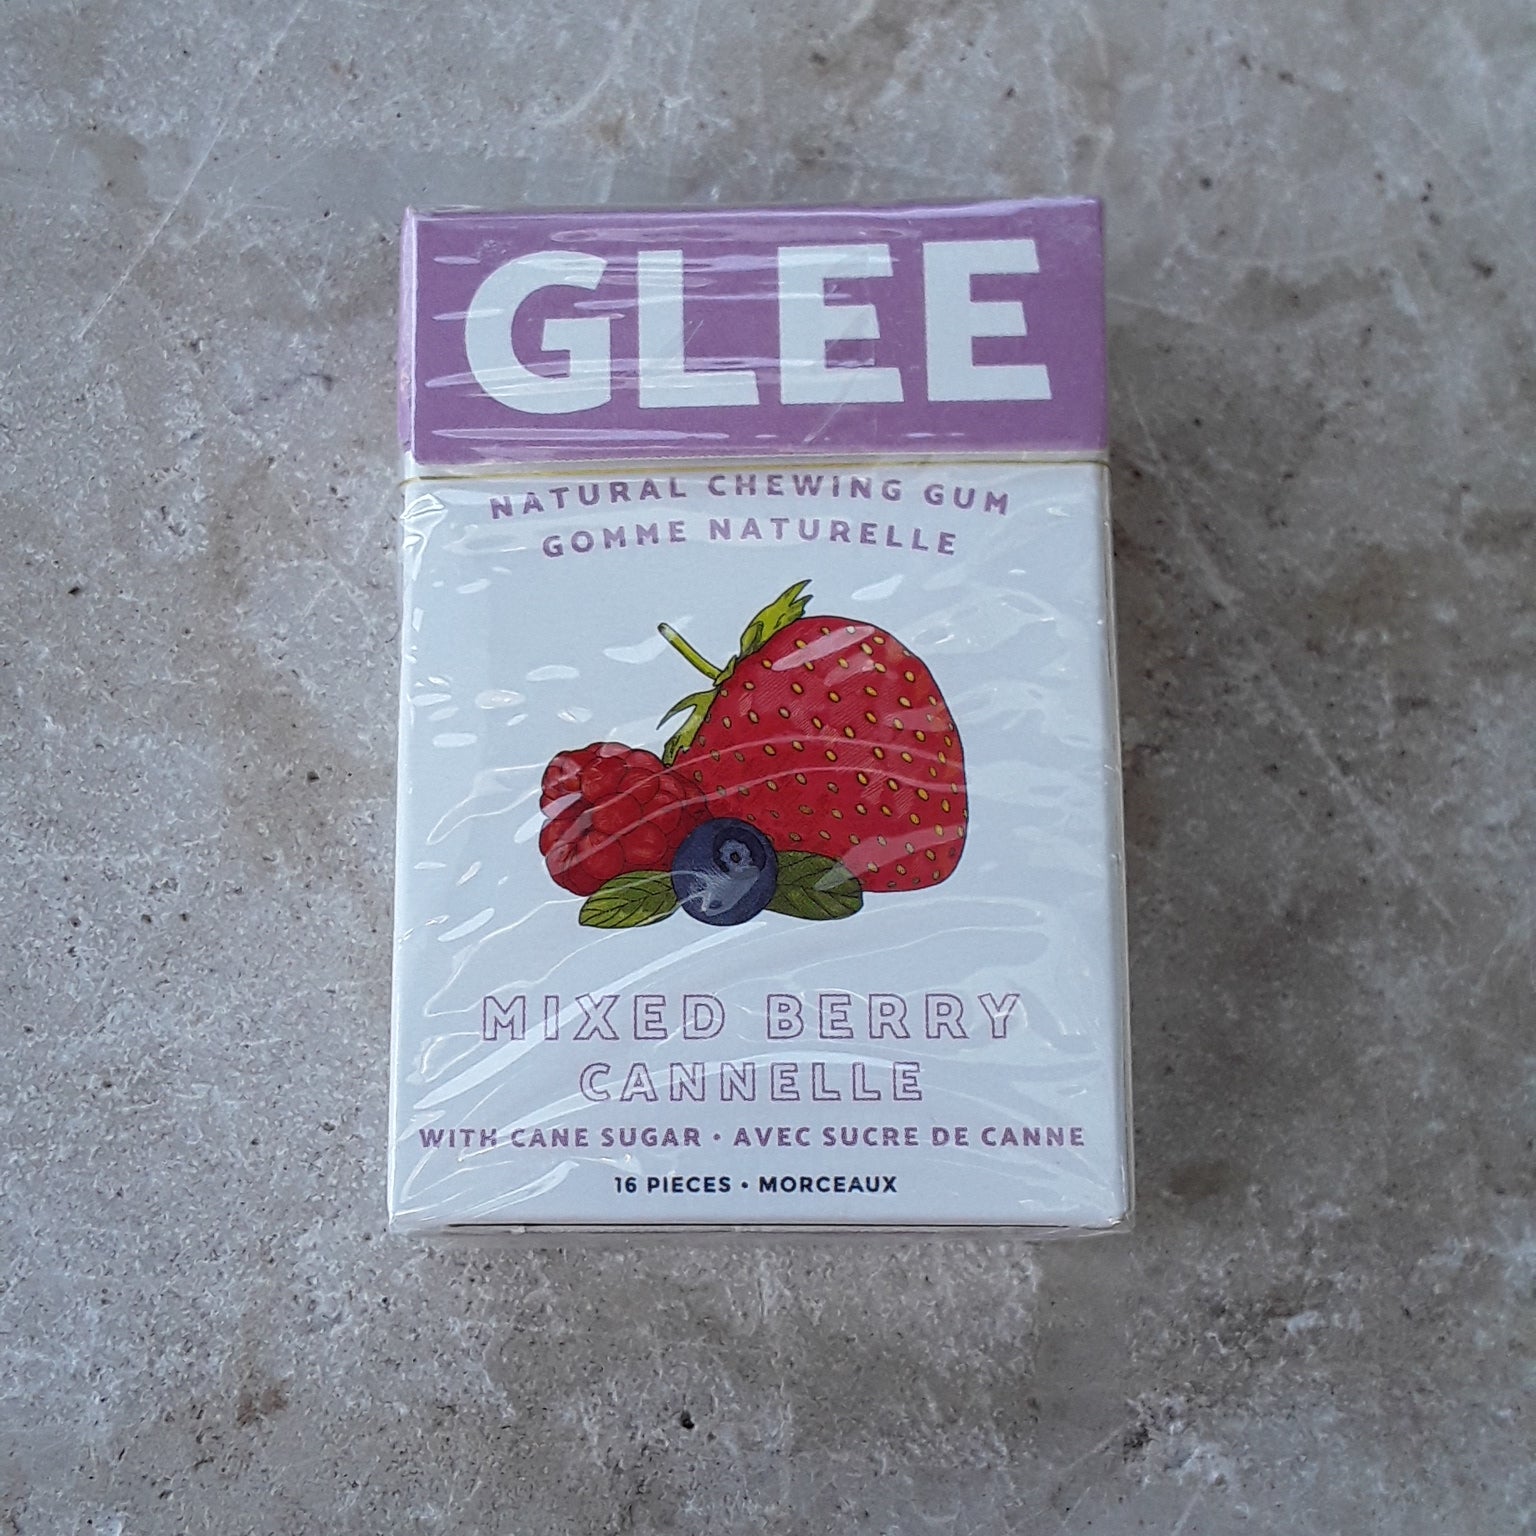 Glee Gum